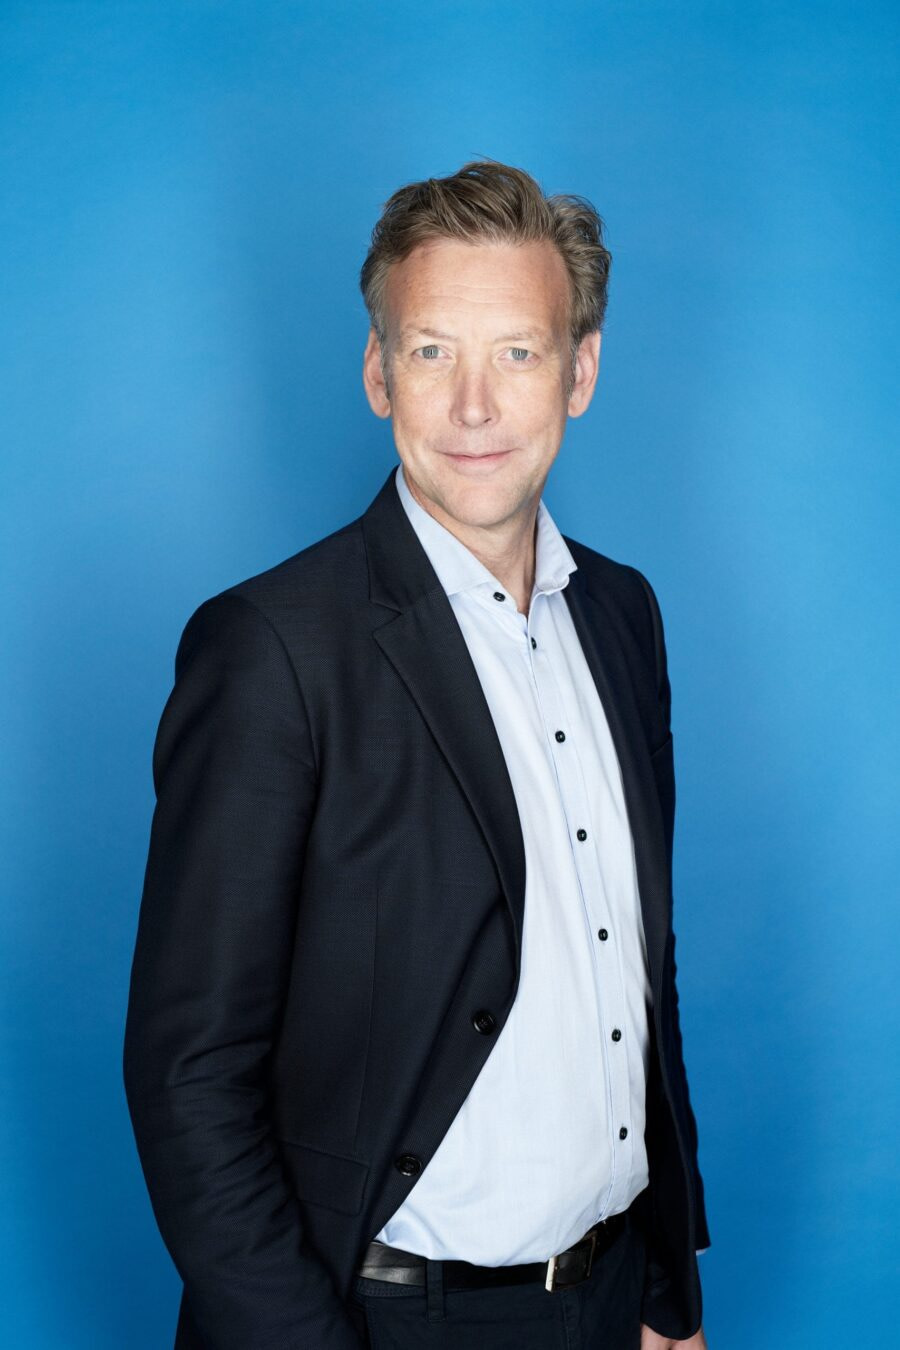 Søren Esben Hansen, employee at Signum, Chief Advisor Team Lead Advanced Market Research